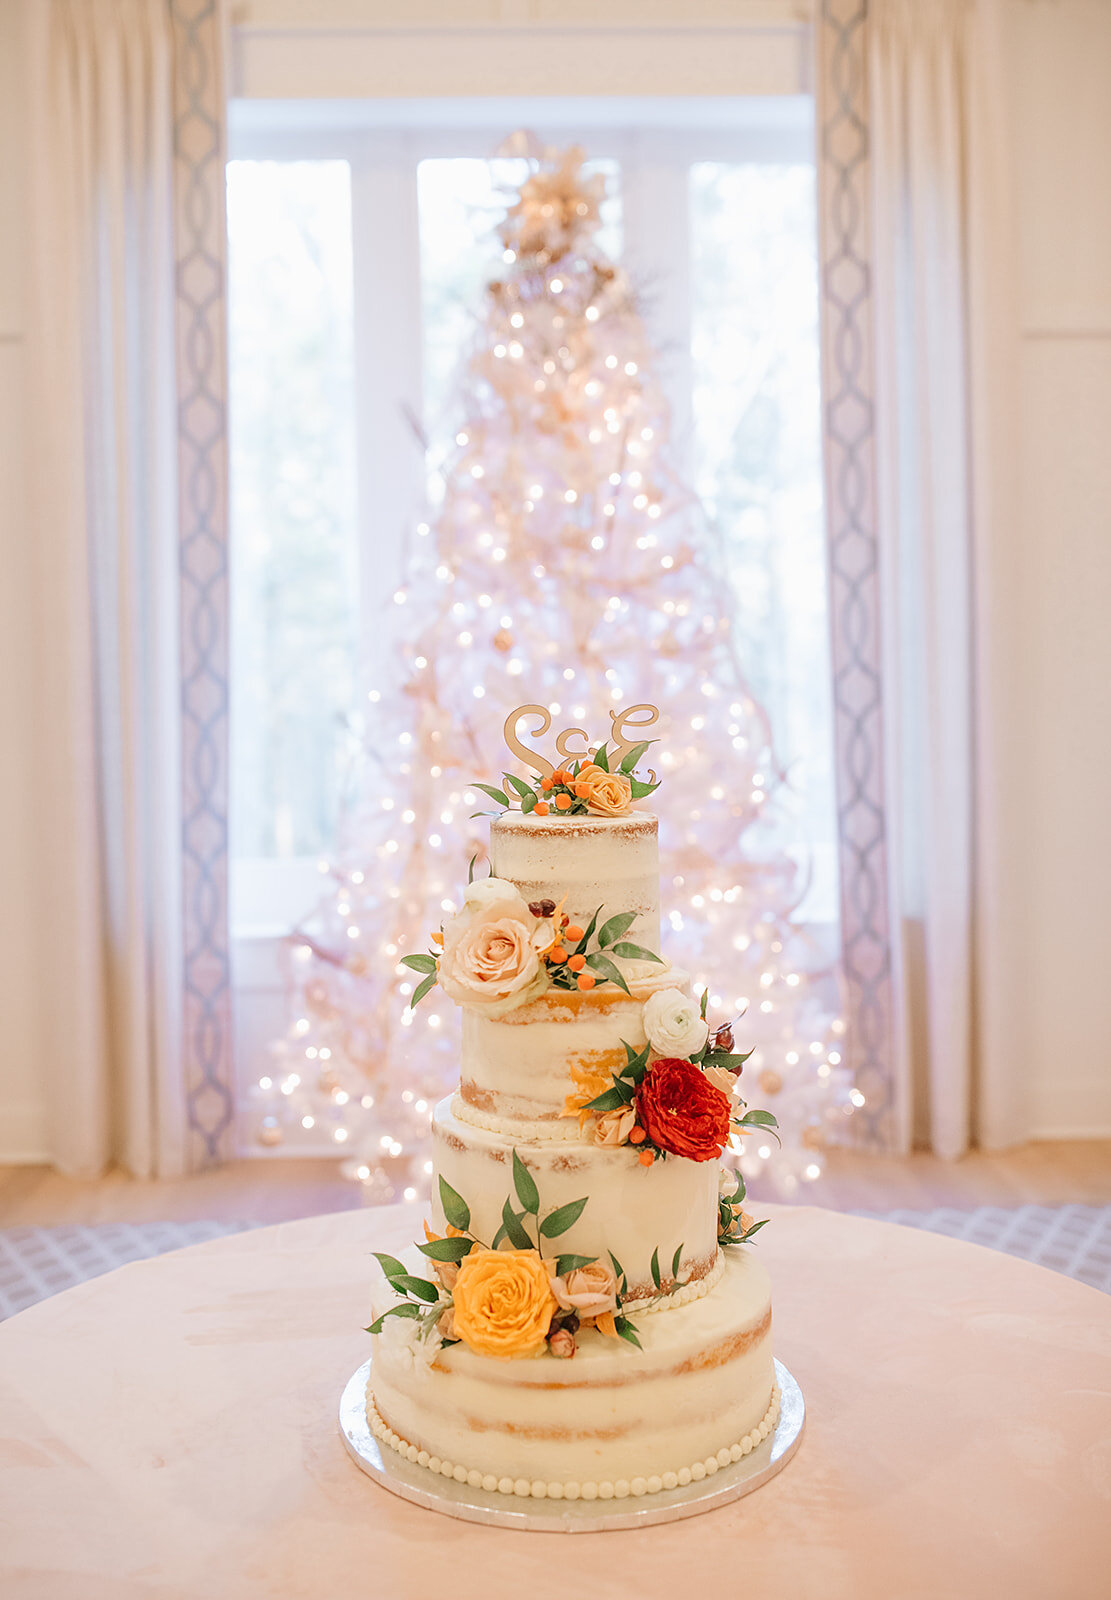 memphis-december-wedding-cake-florals